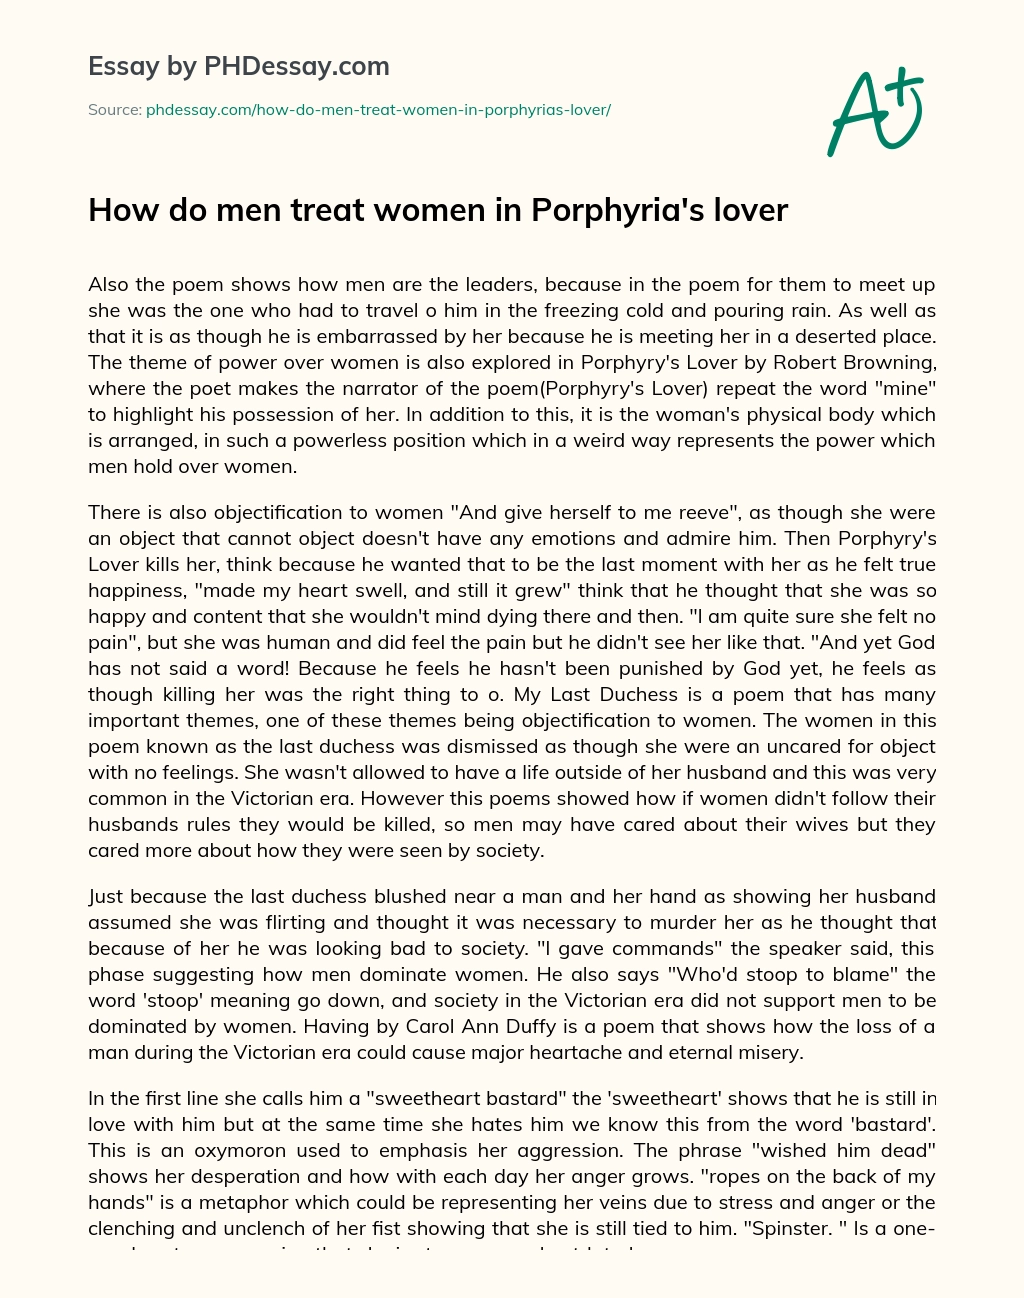 How do men treat women in Porphyria’s lover essay